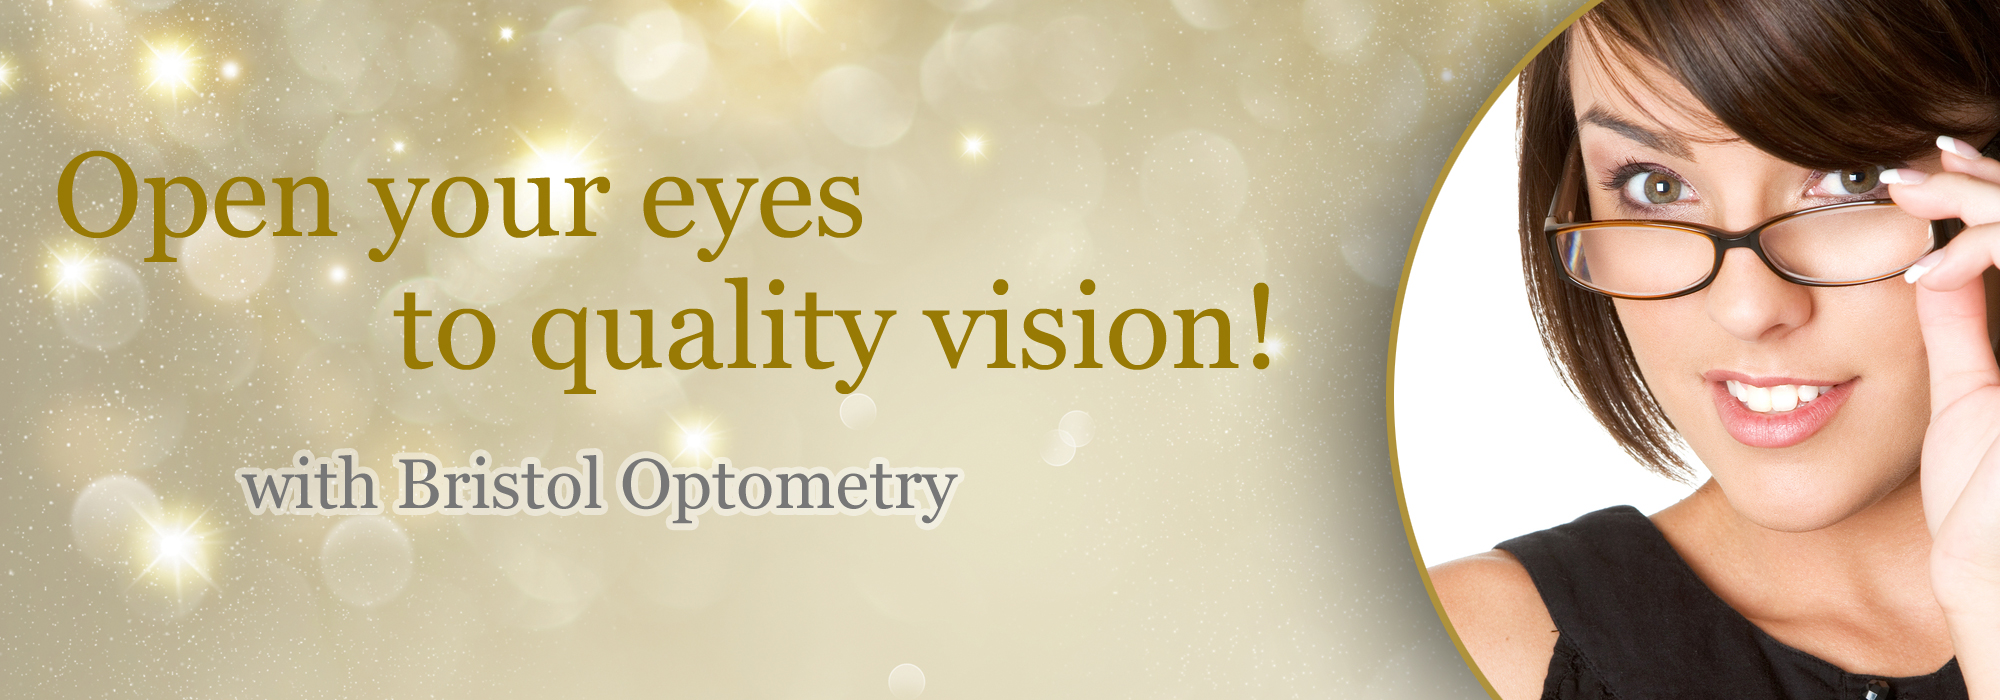 Bristol Optometry